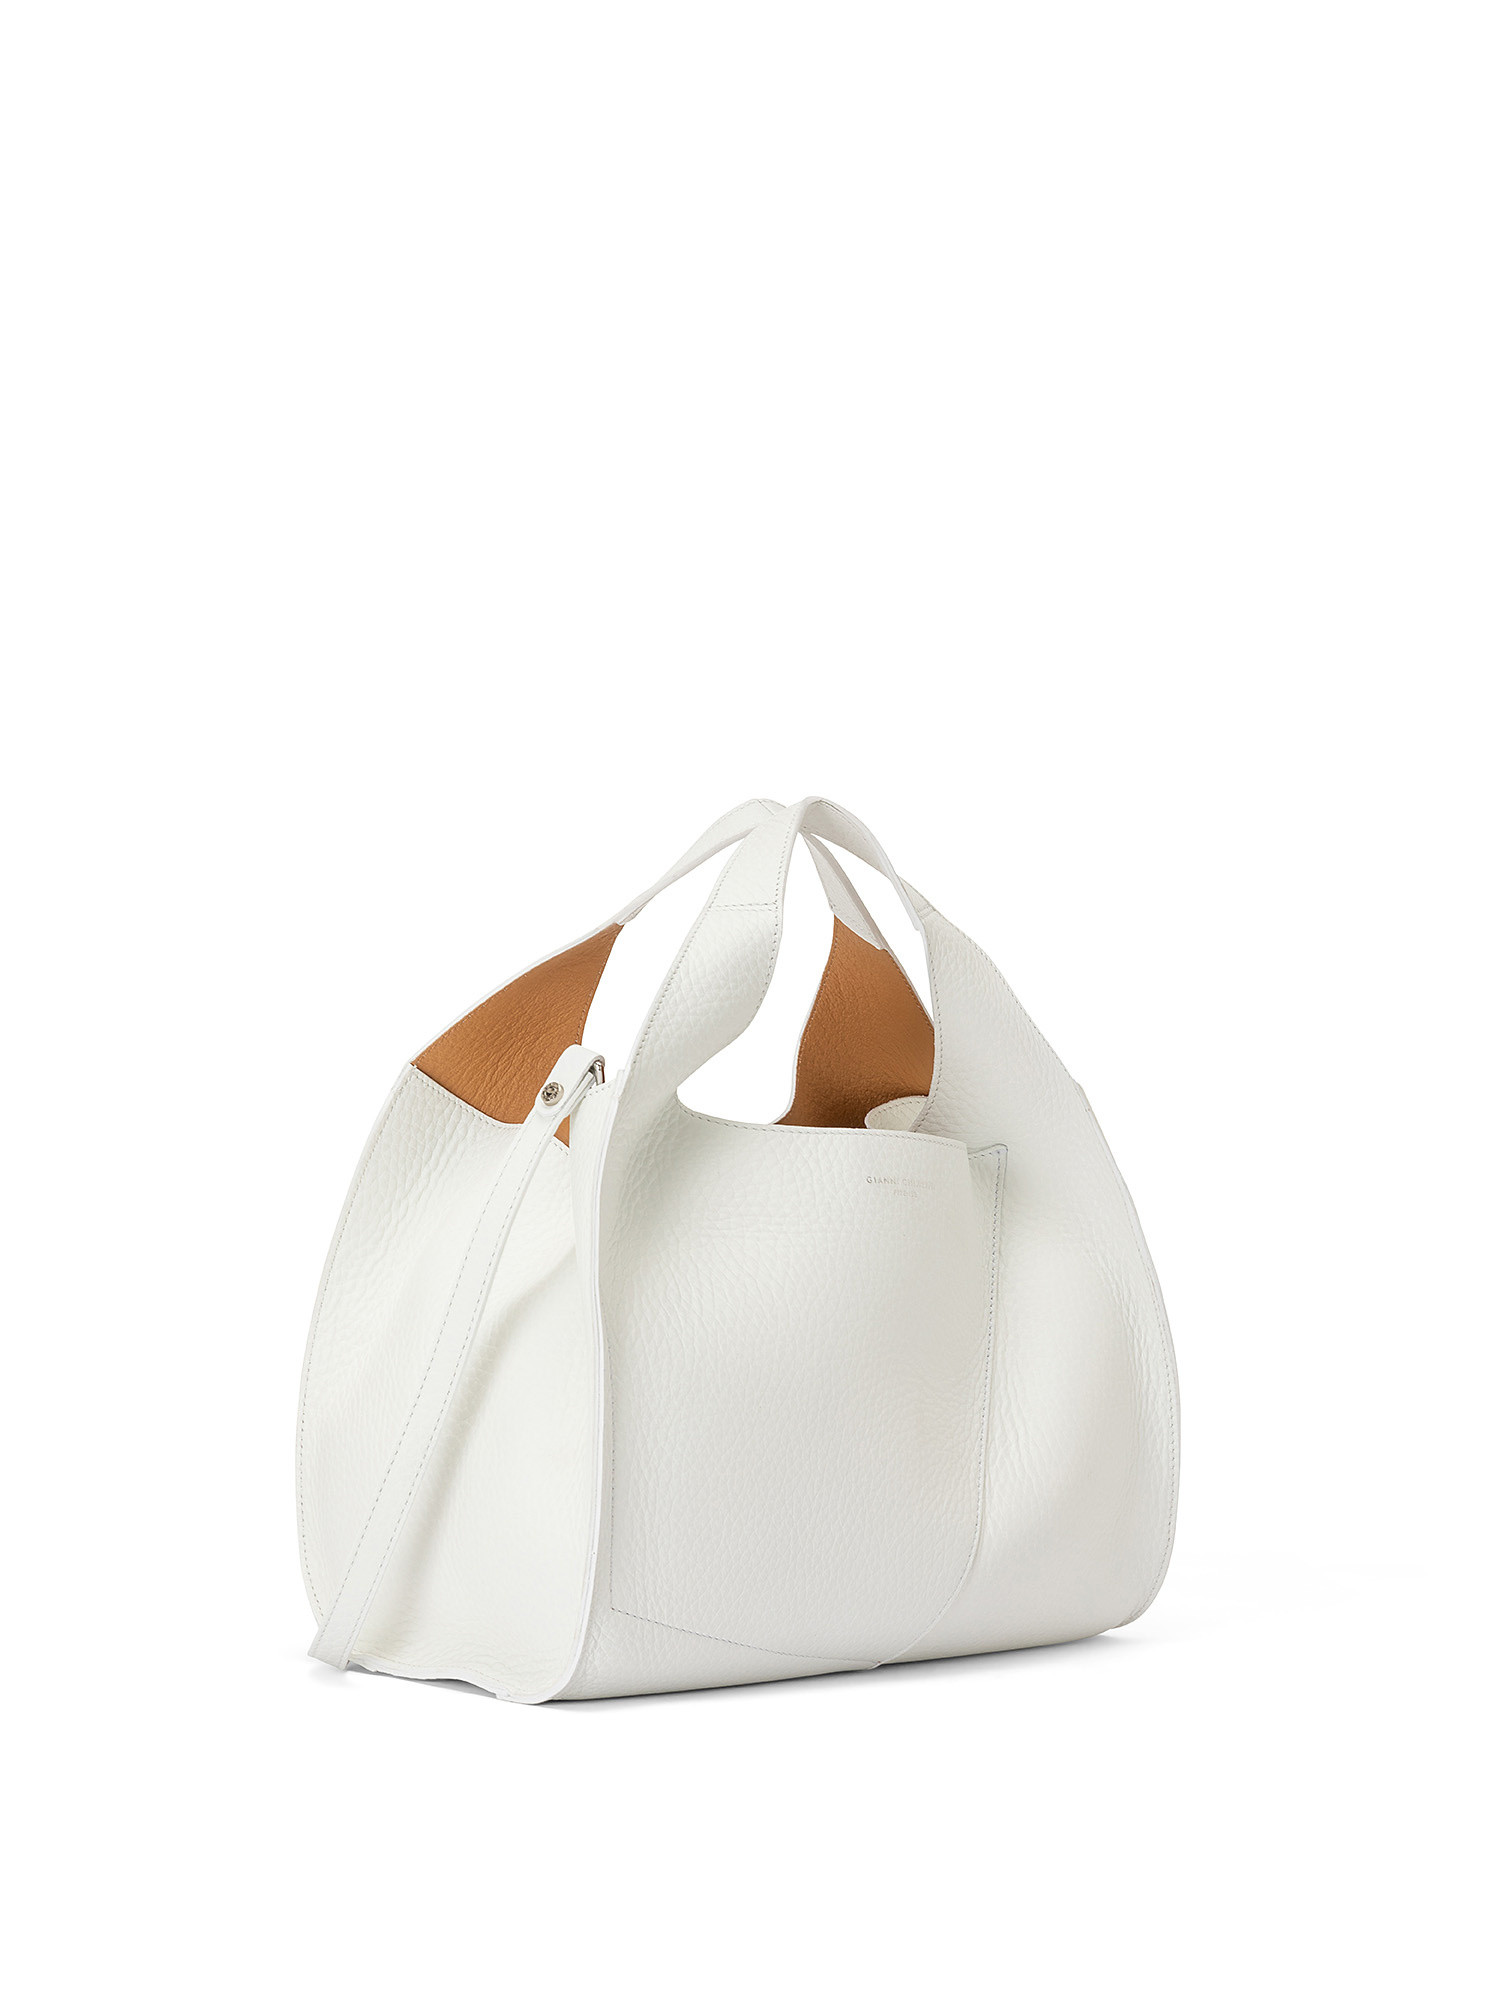 Euphoria leather bag, White, large image number 1